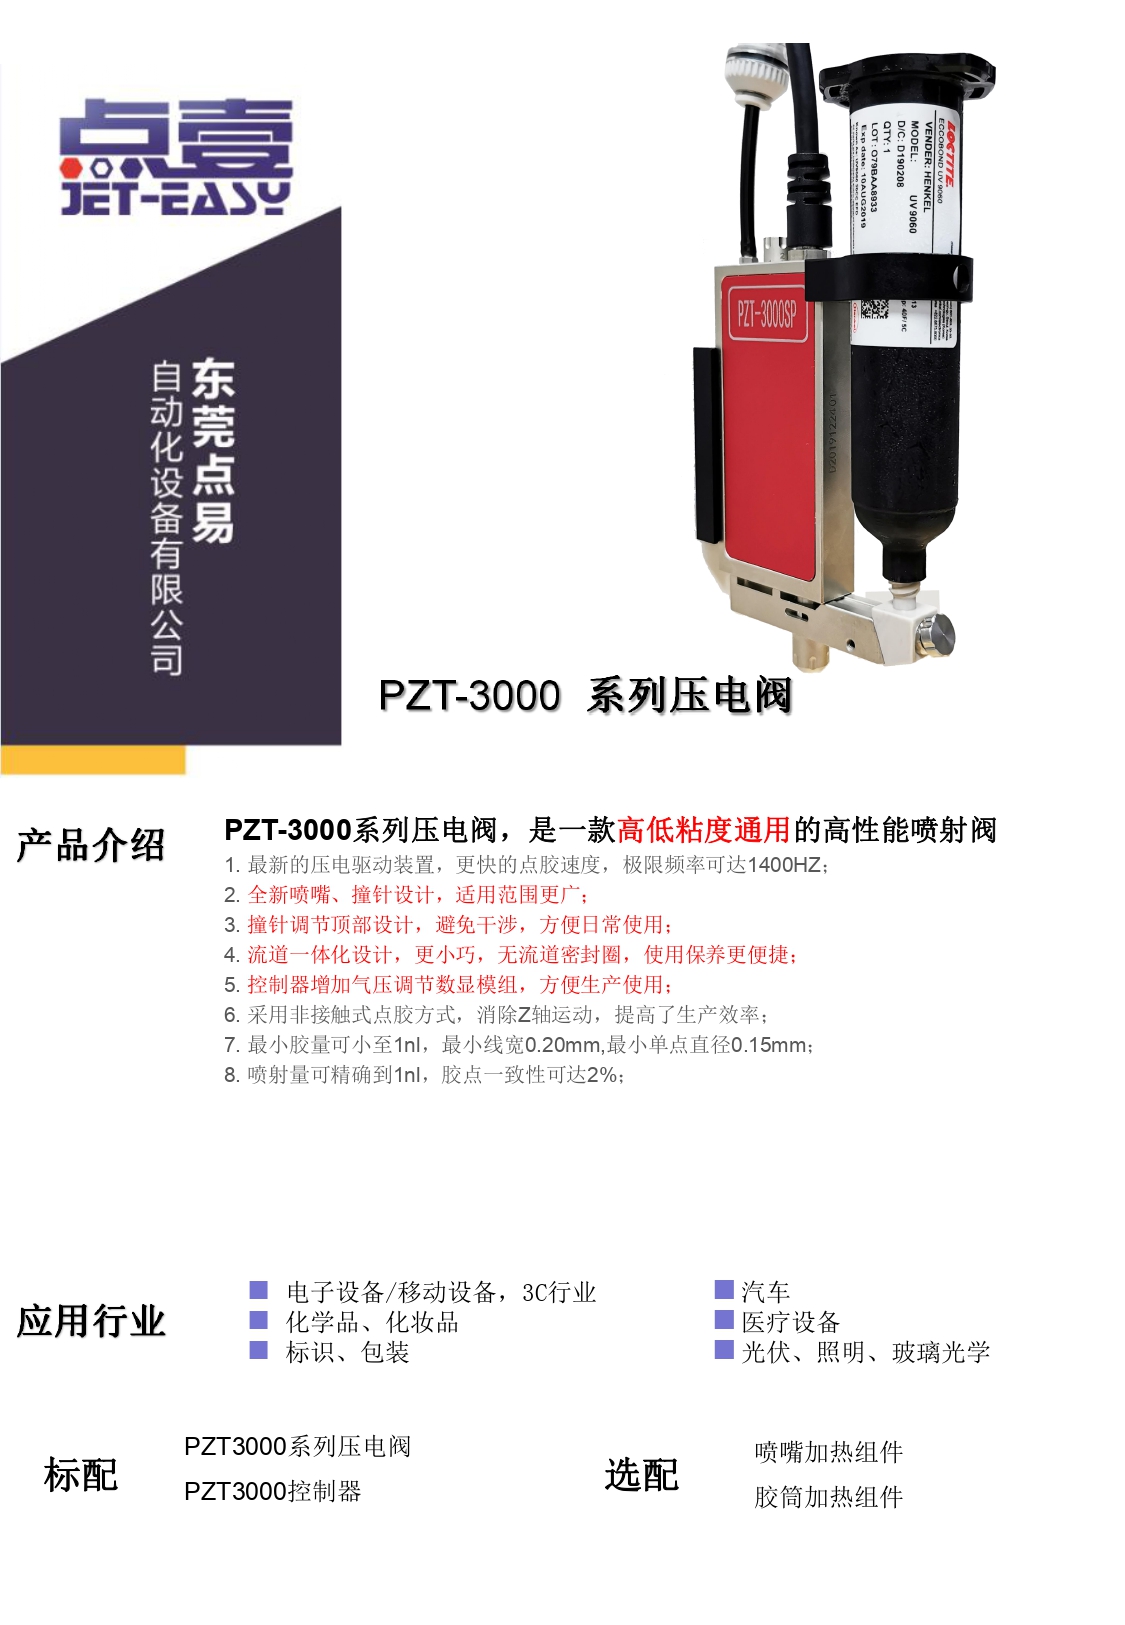 PZT-3000压电阀简介资料_page-0001.jpg